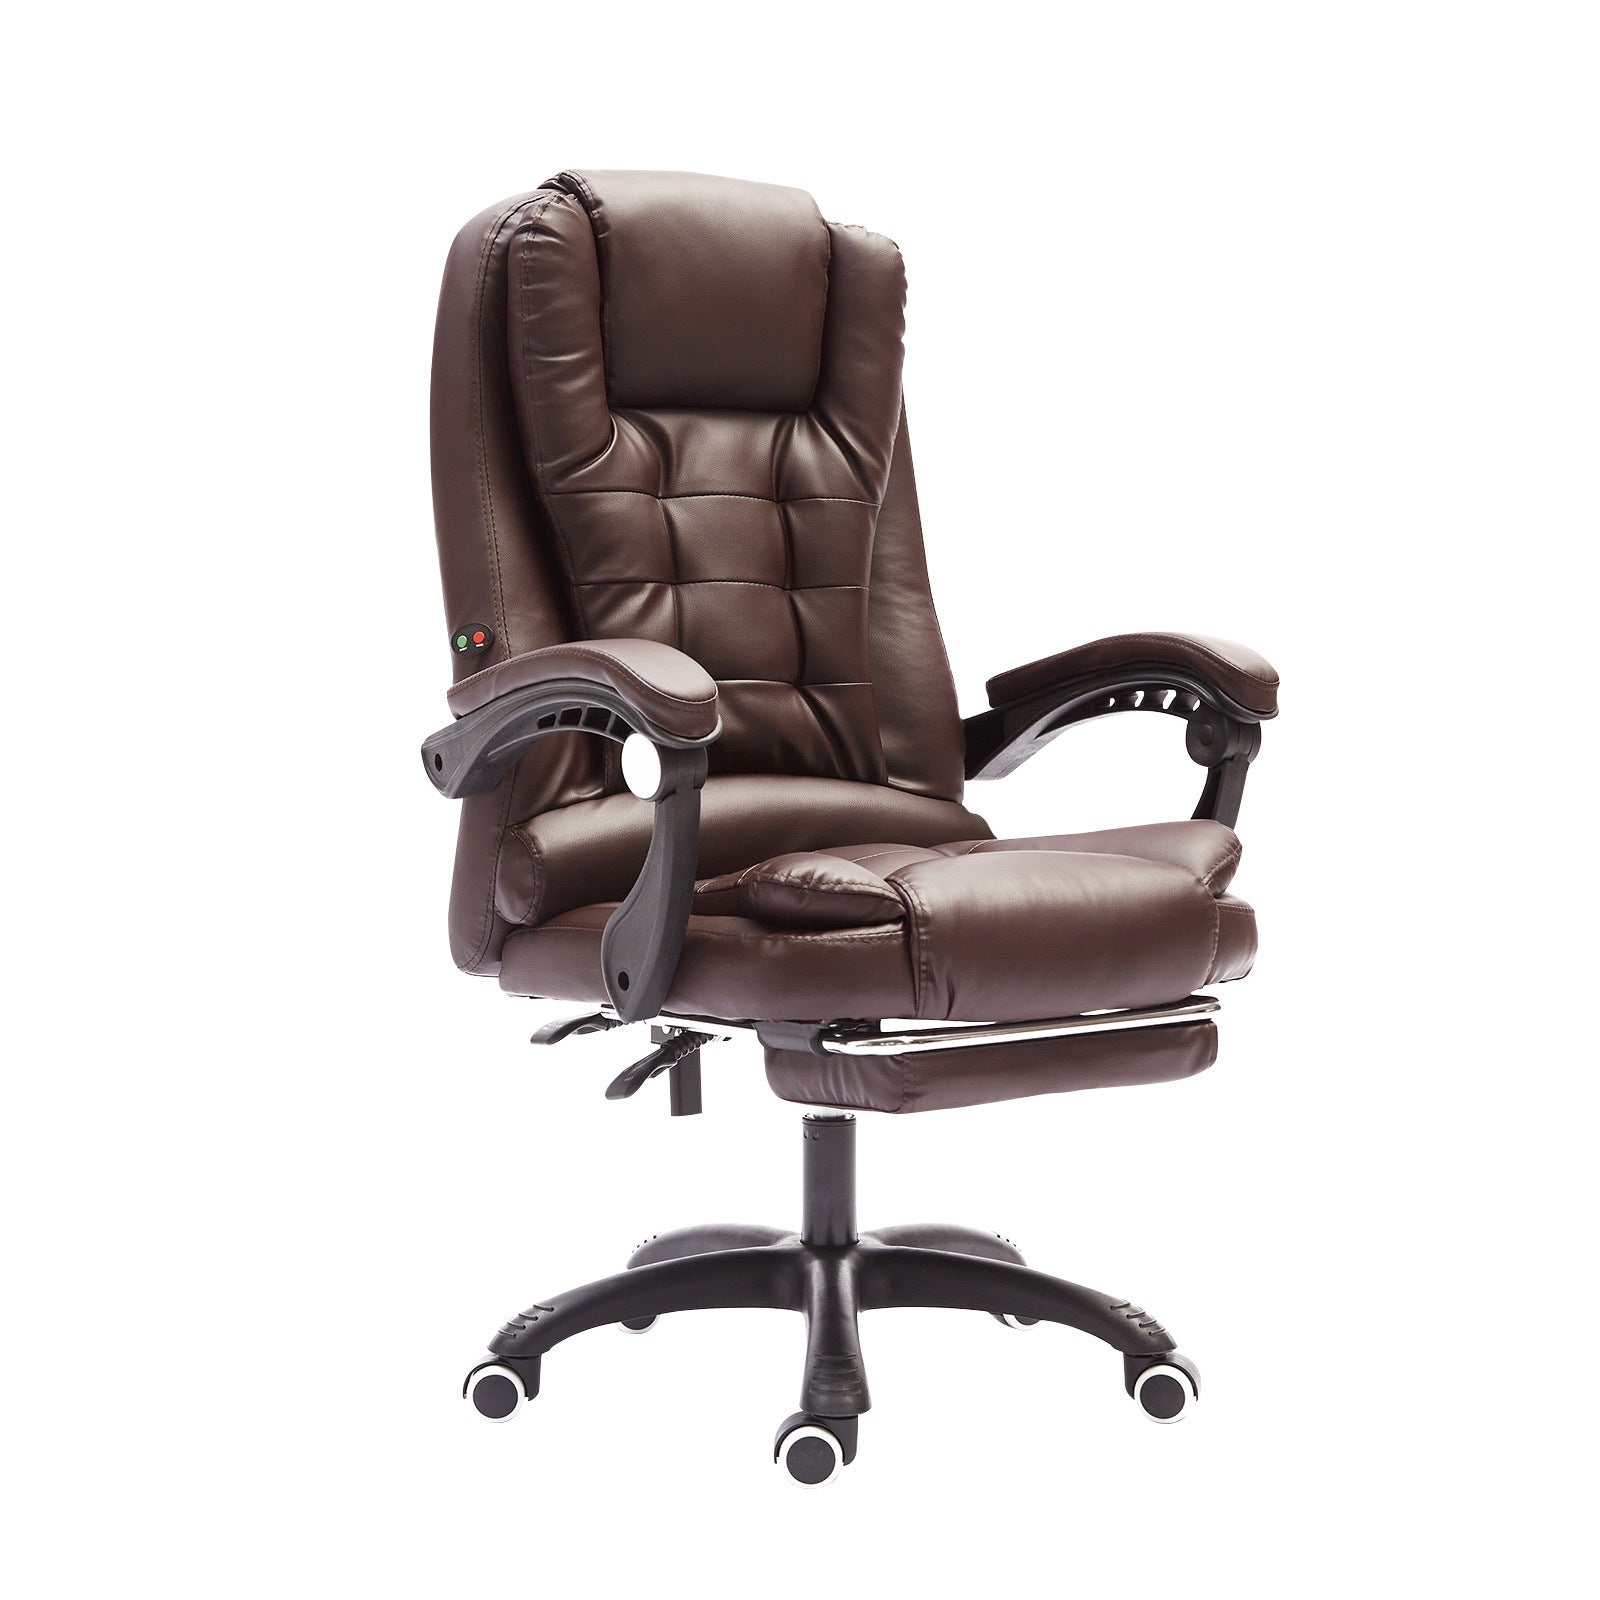 La Bella Espresso Massage Footrest Ergonomic Executive Office Chair